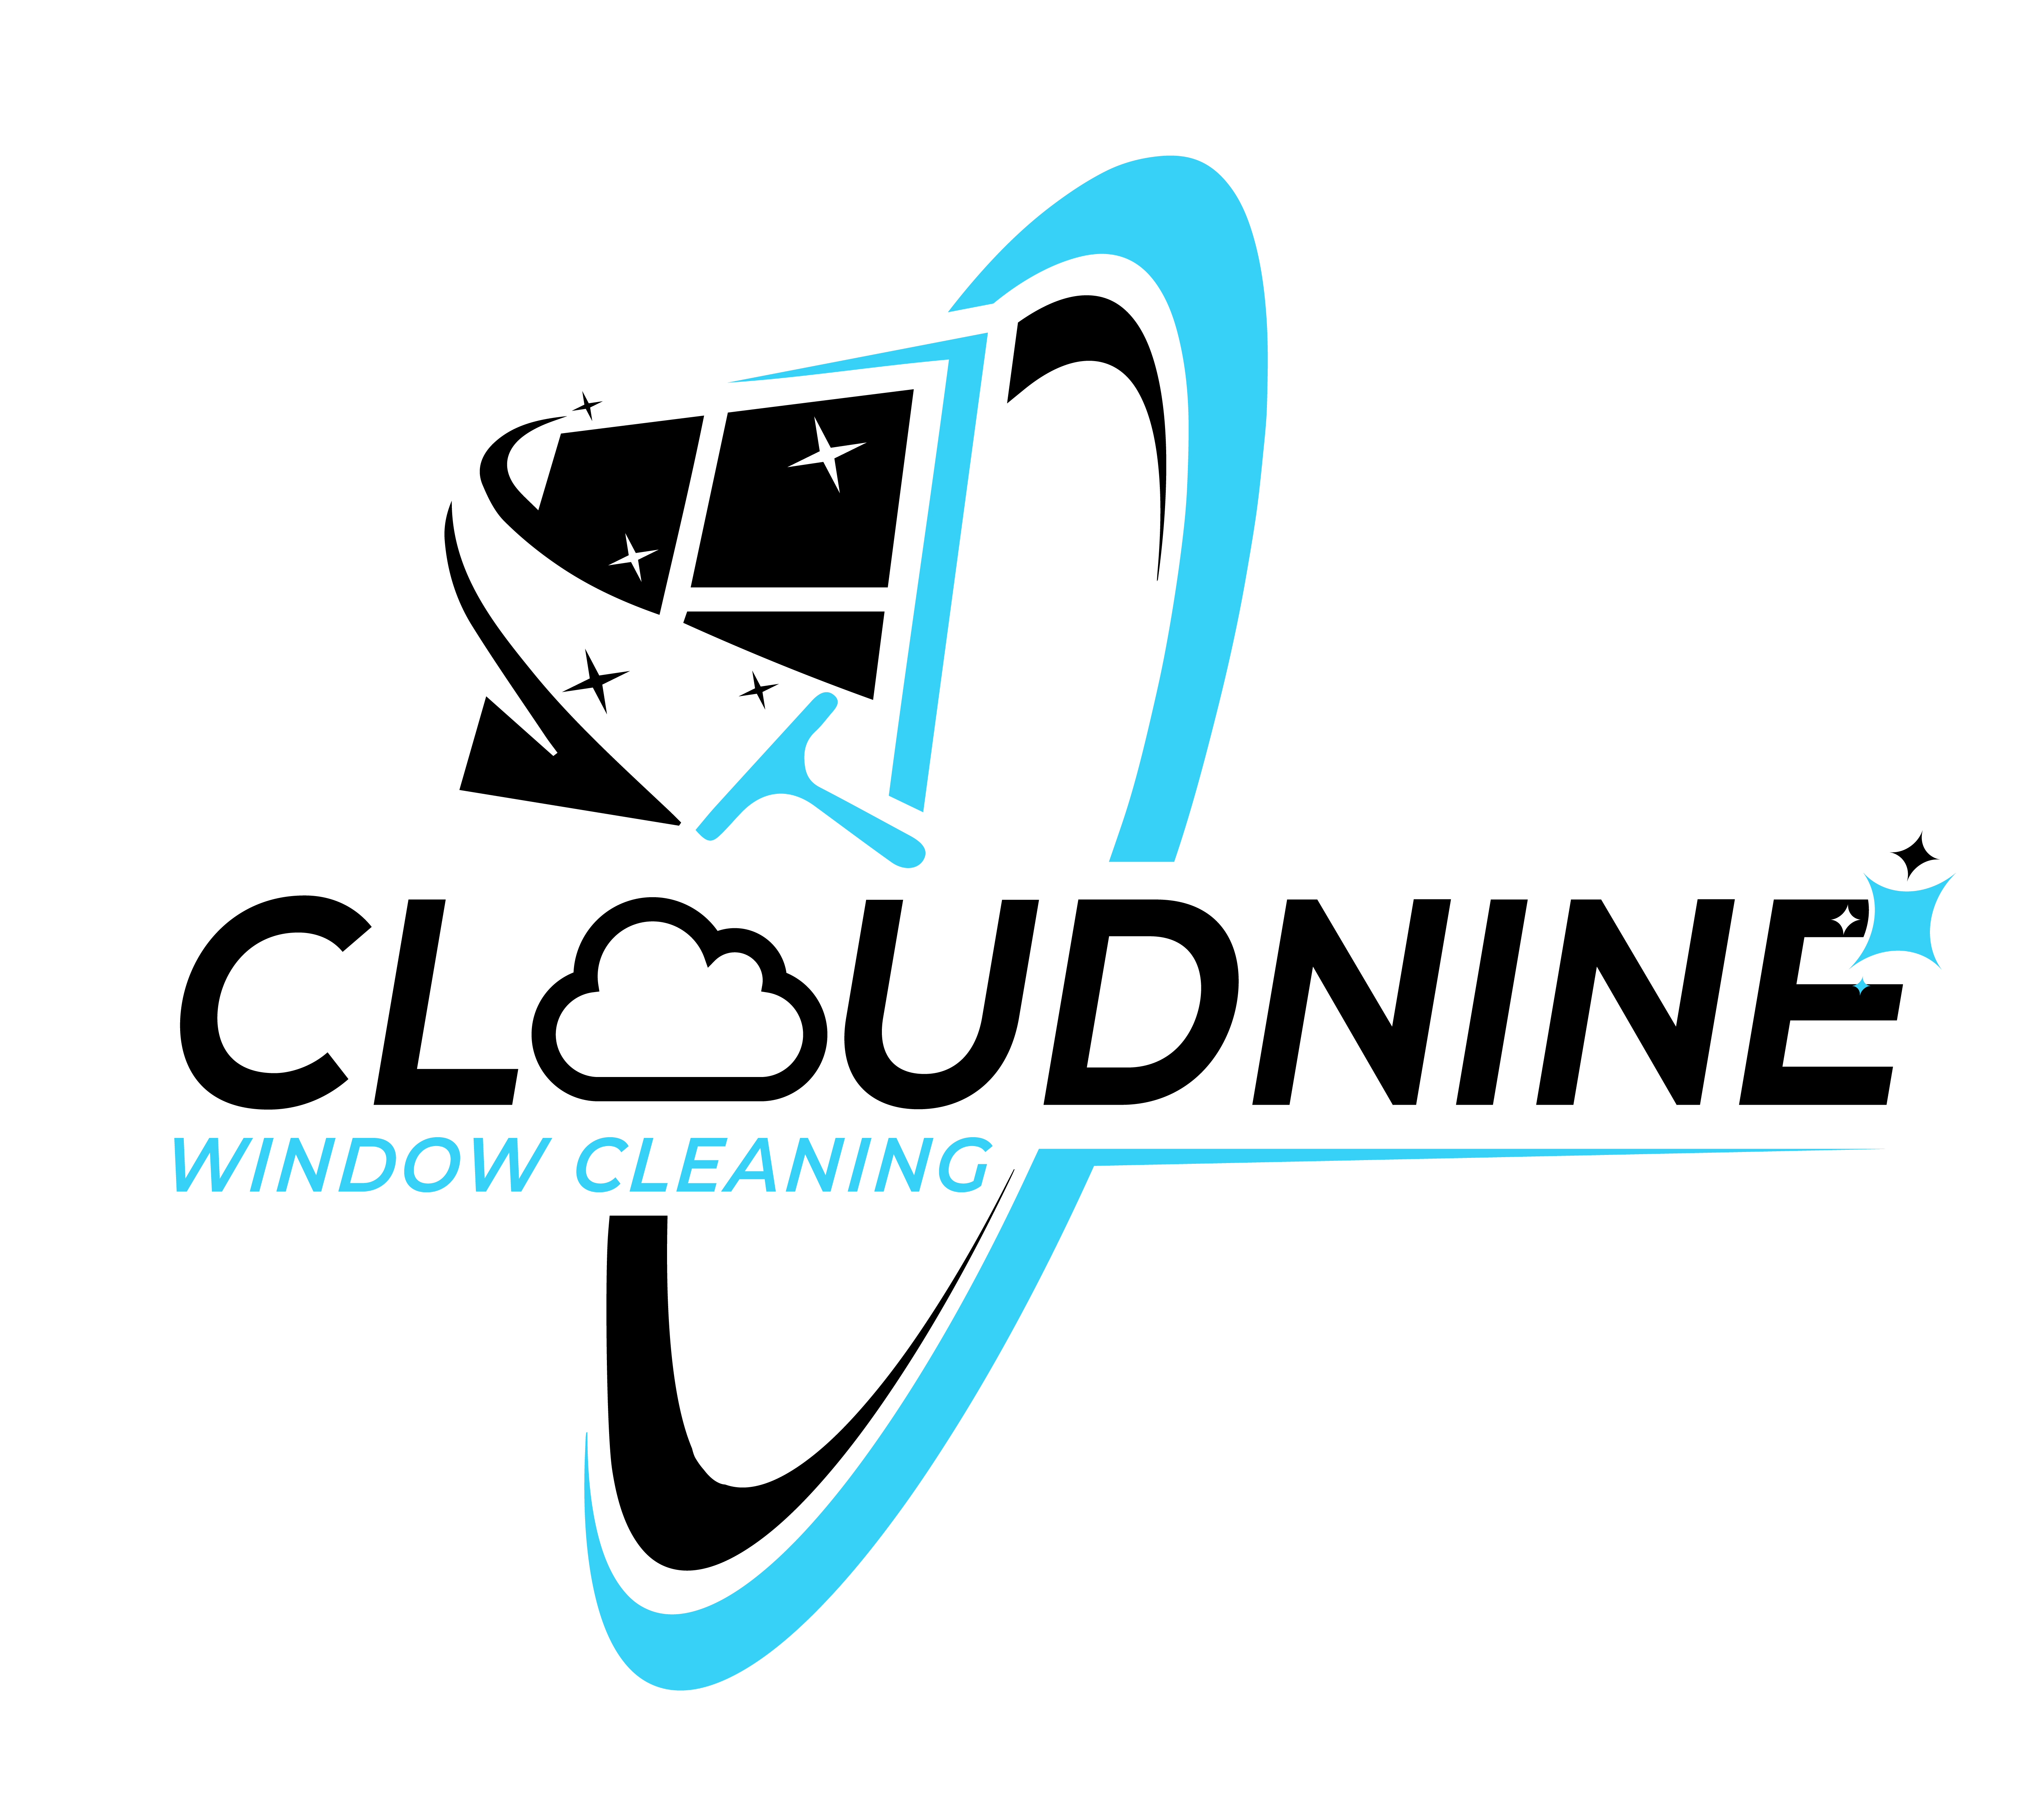 Cloud Nine Window Cleaning